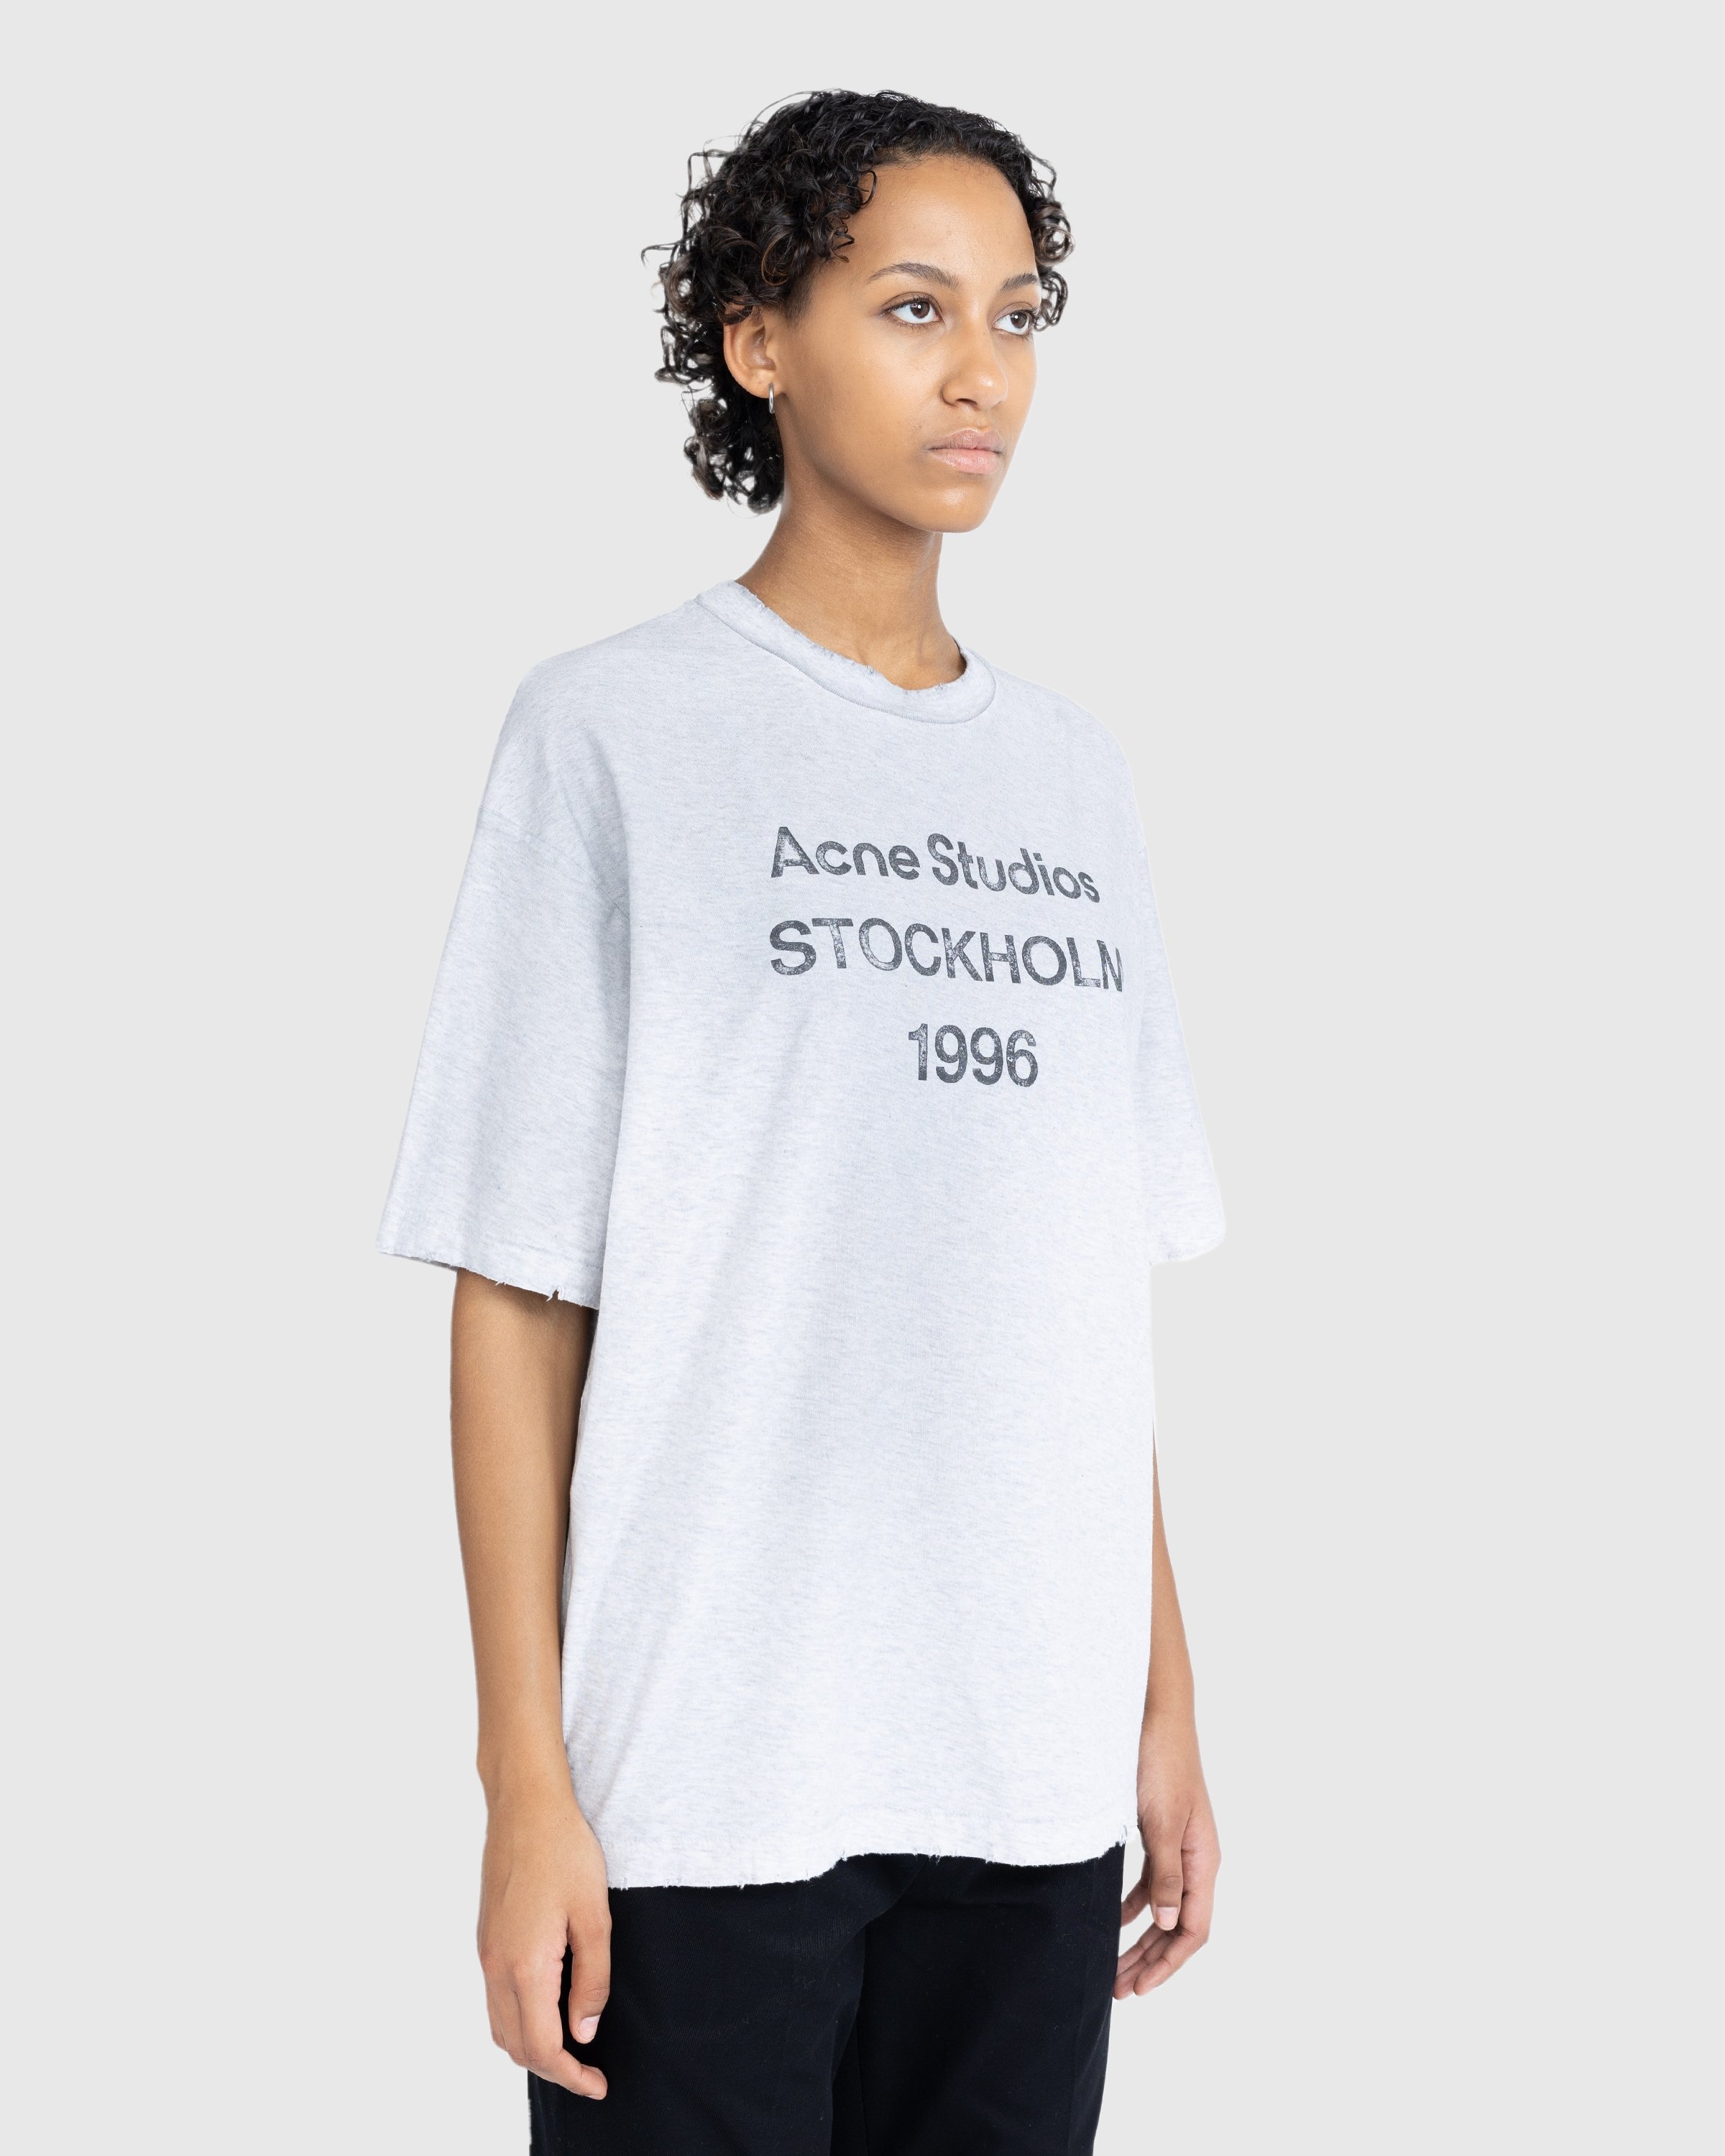 Acne Studios – Stockholm 1996 T-Shirt Grey - T-Shirts - Grey - Image 3